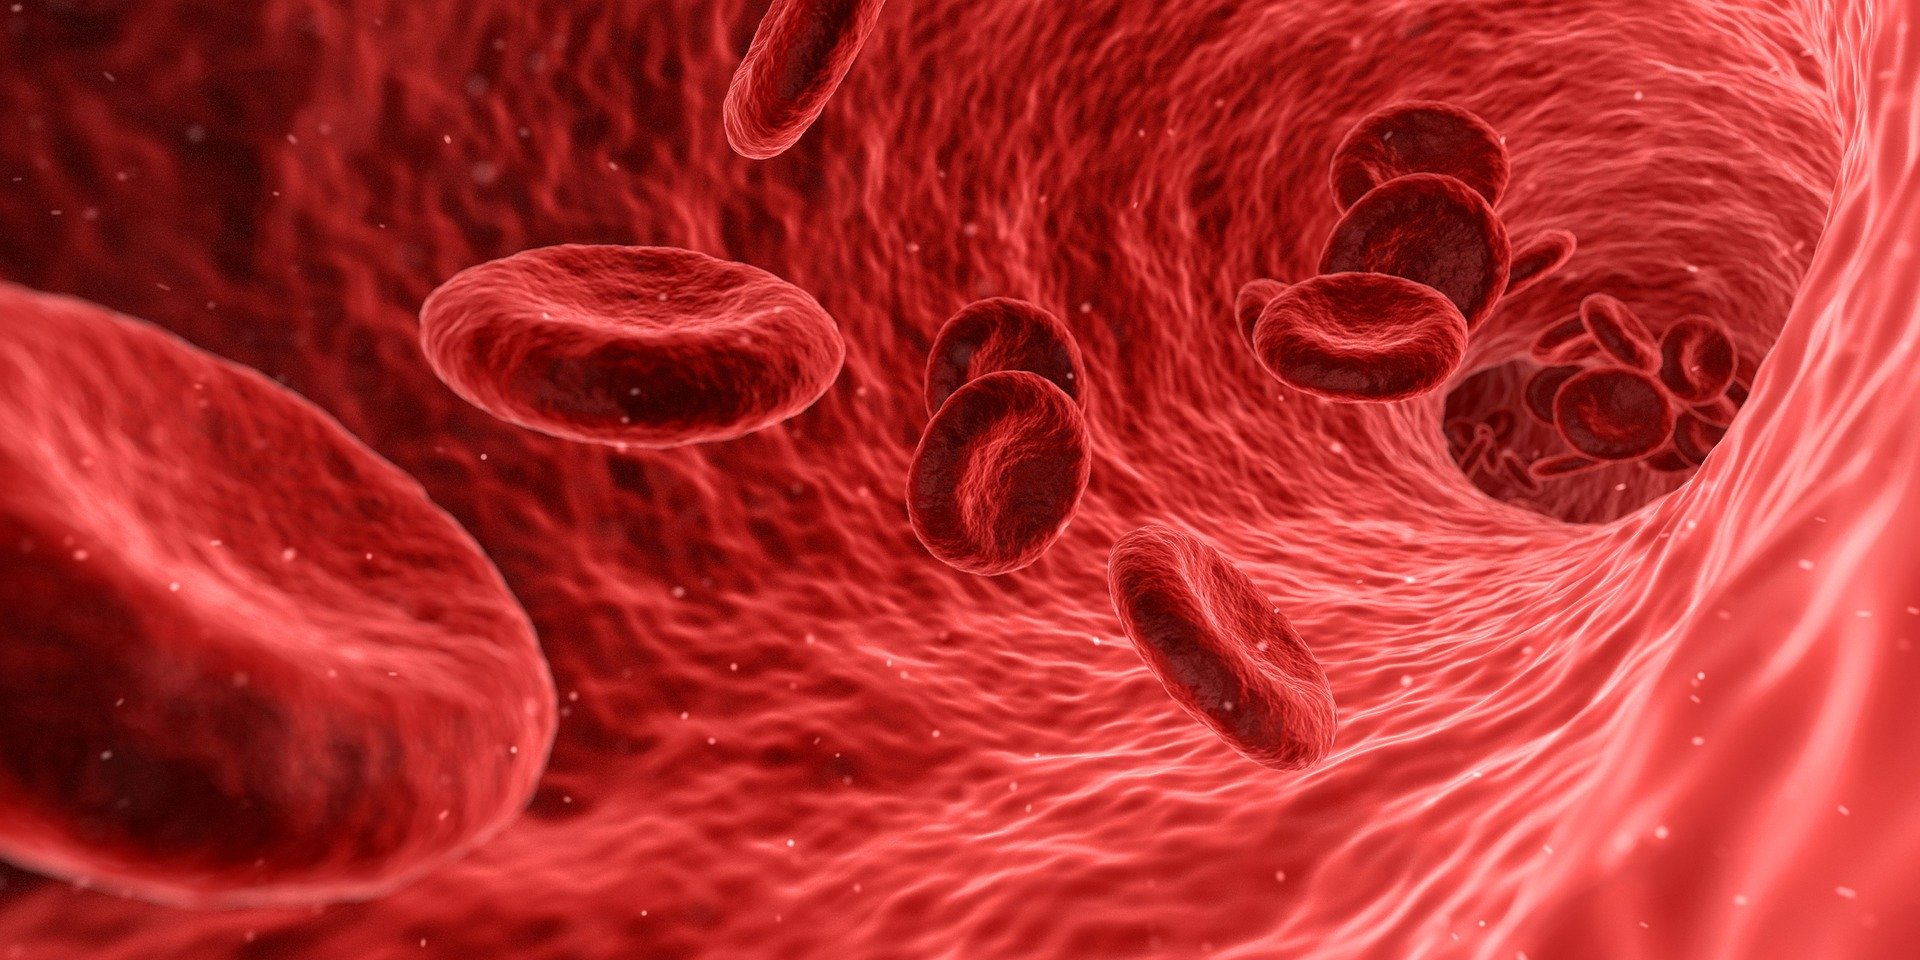 Hemoglobina Glicada - Testes Rápidos